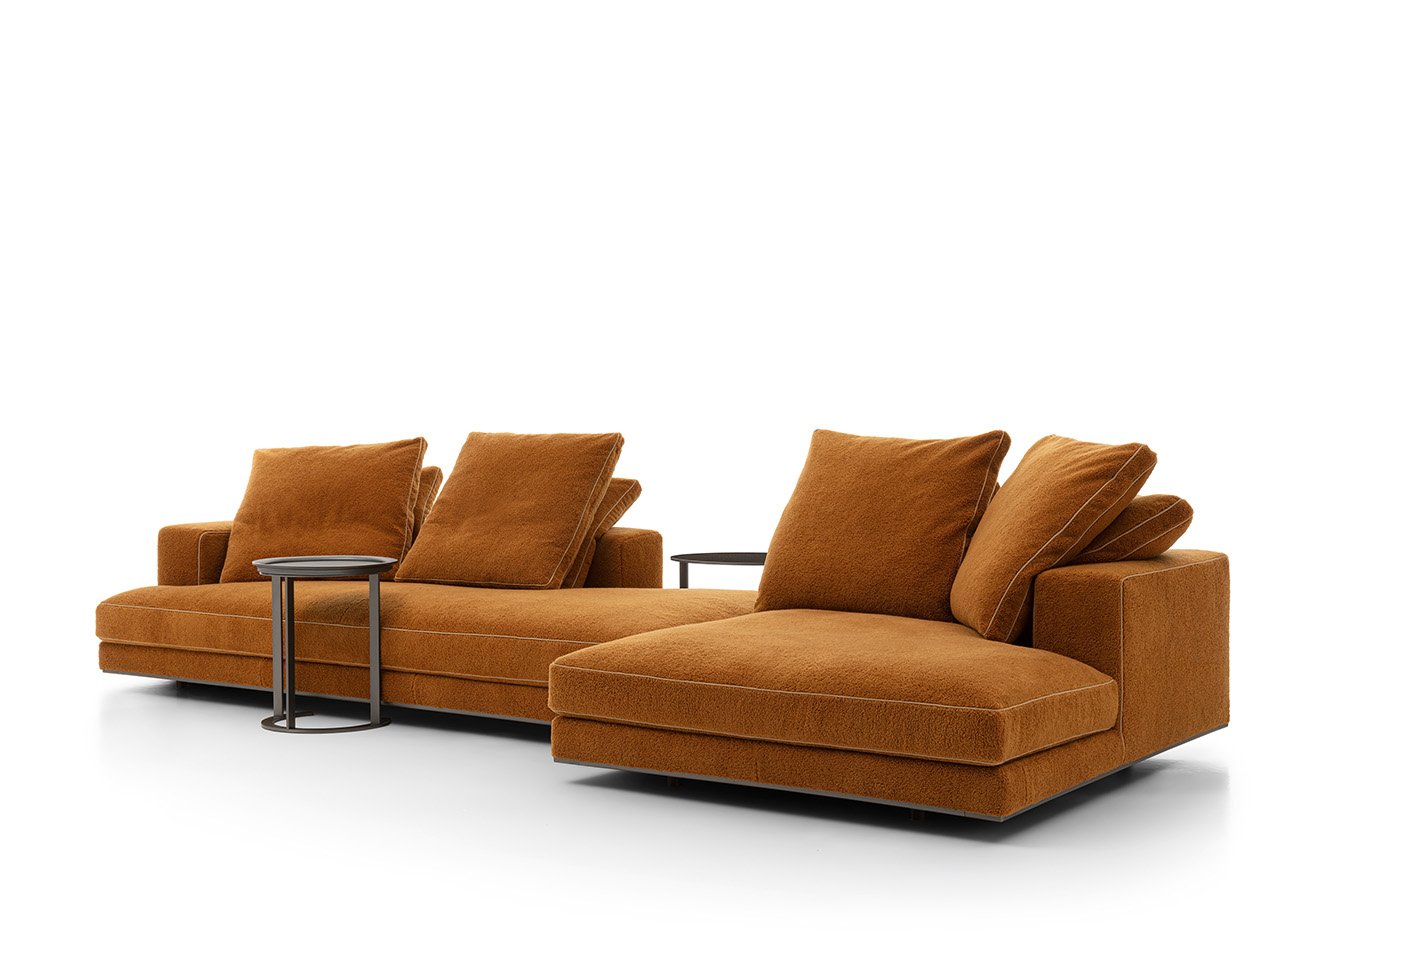 The Arbiter sofa designed by Antonio Citterio for Maxalto. Photo c/o Maxalto.